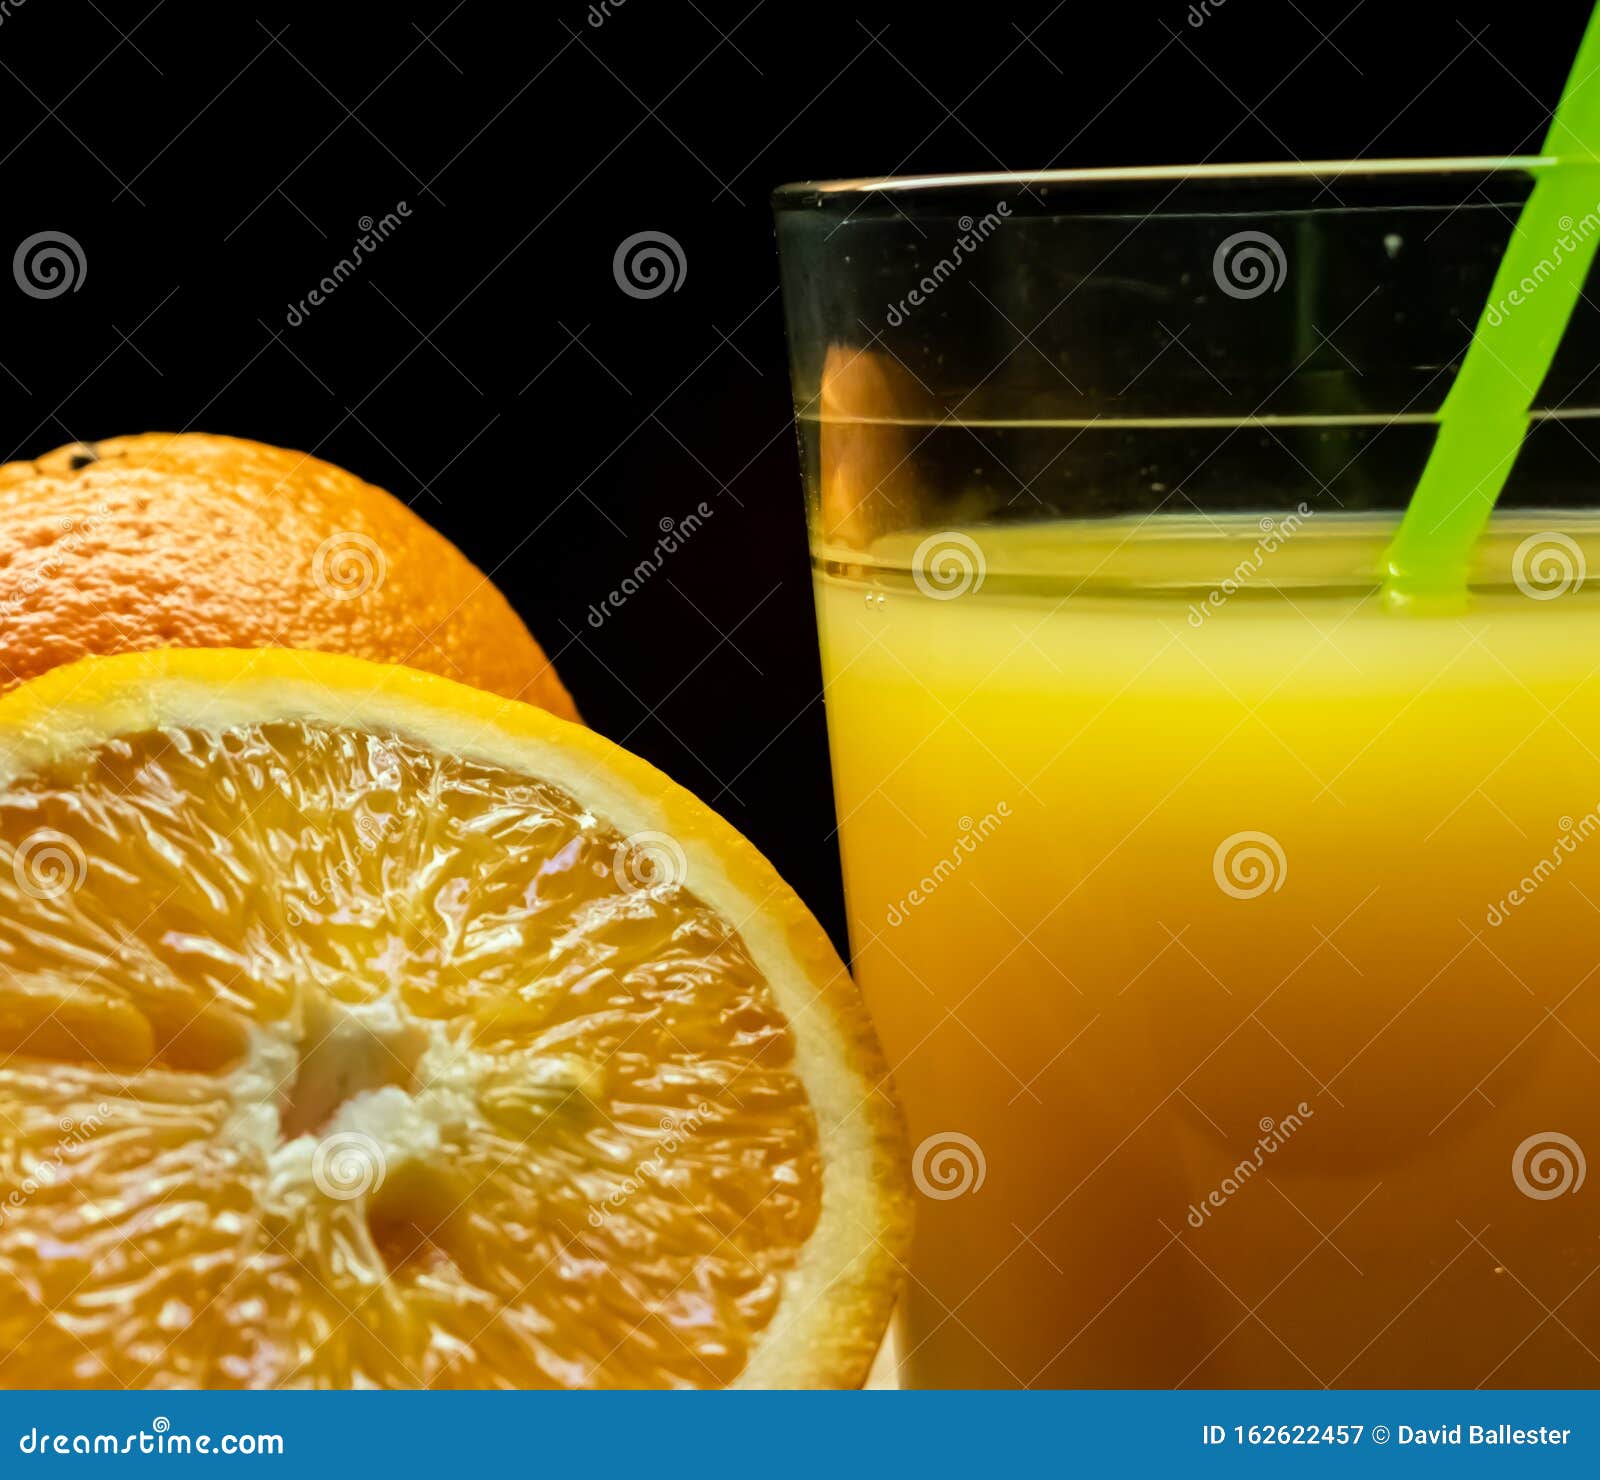 Spanish orange juice stock image. Image of brighten - 162622457